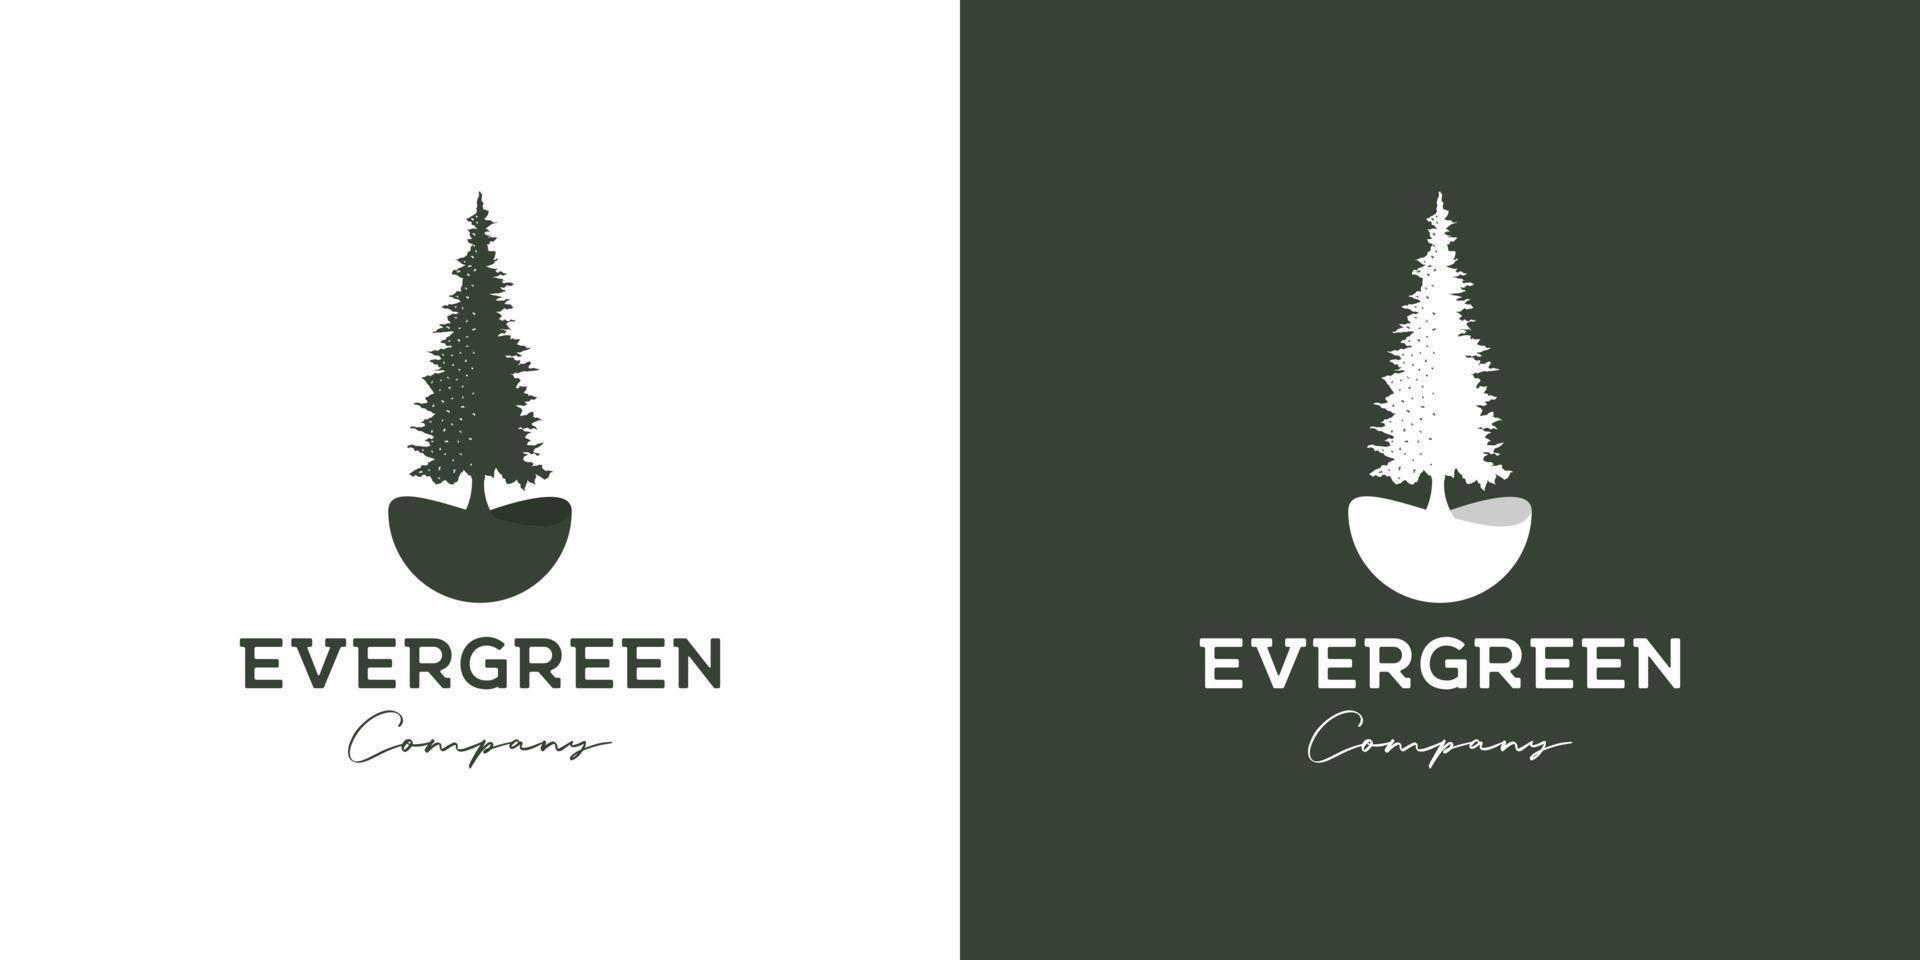 albero di pino sempreverde timberland logo design vector